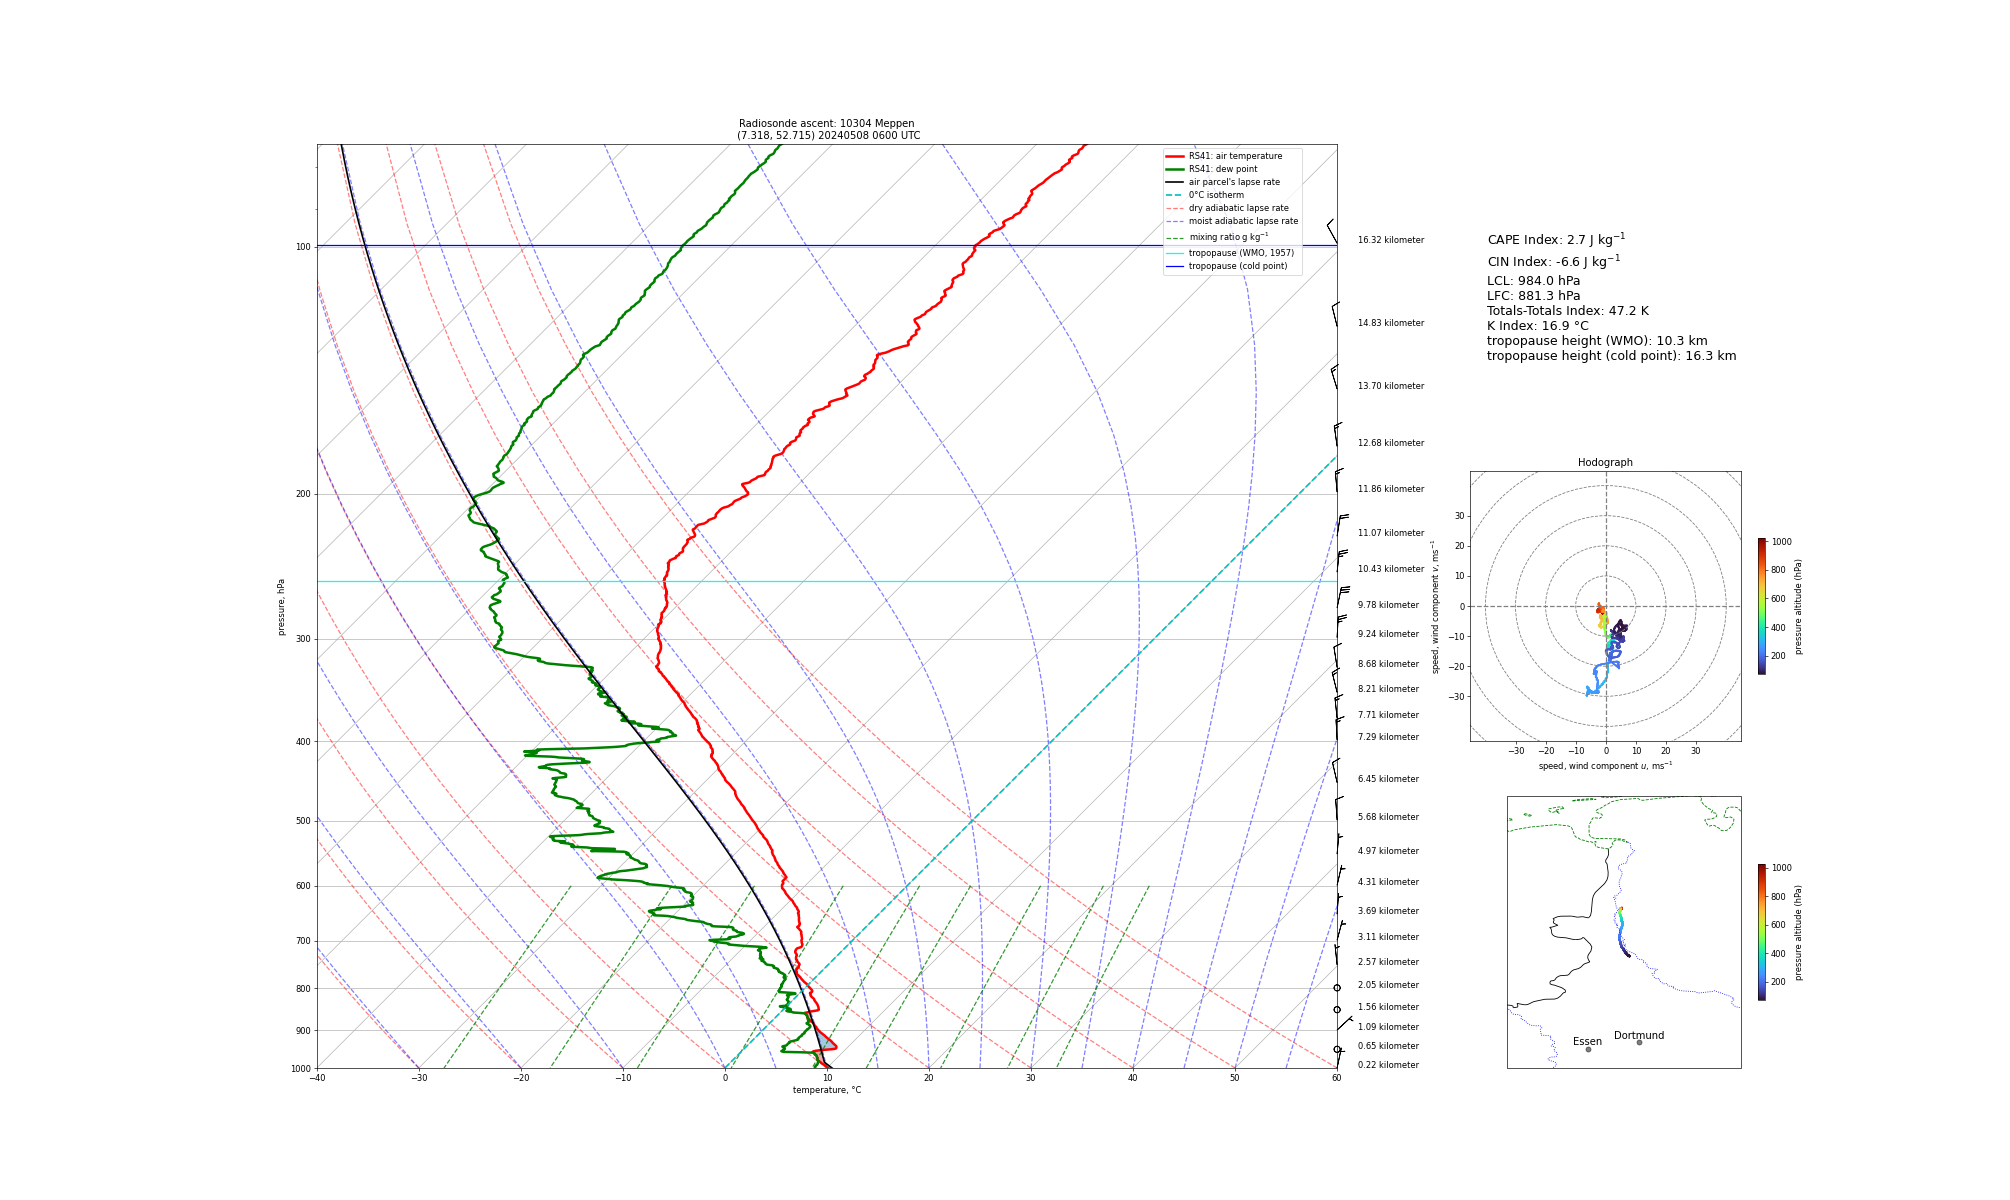 Visualisation of the radiosounding profile at Meppen at 0600 UTC